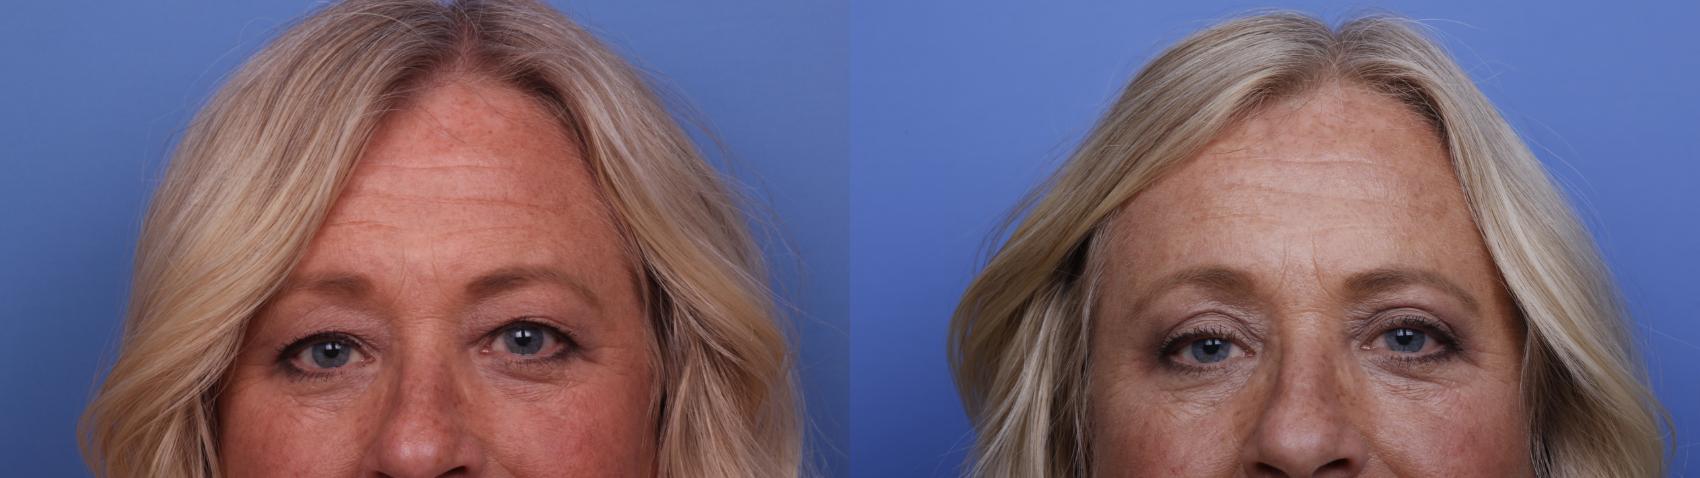 Blepharoplasty Before & After Photo | Scottsdale & Phoenix, AZ | Hobgood Facial Plastic Surgery: Todd Hobgood, MD